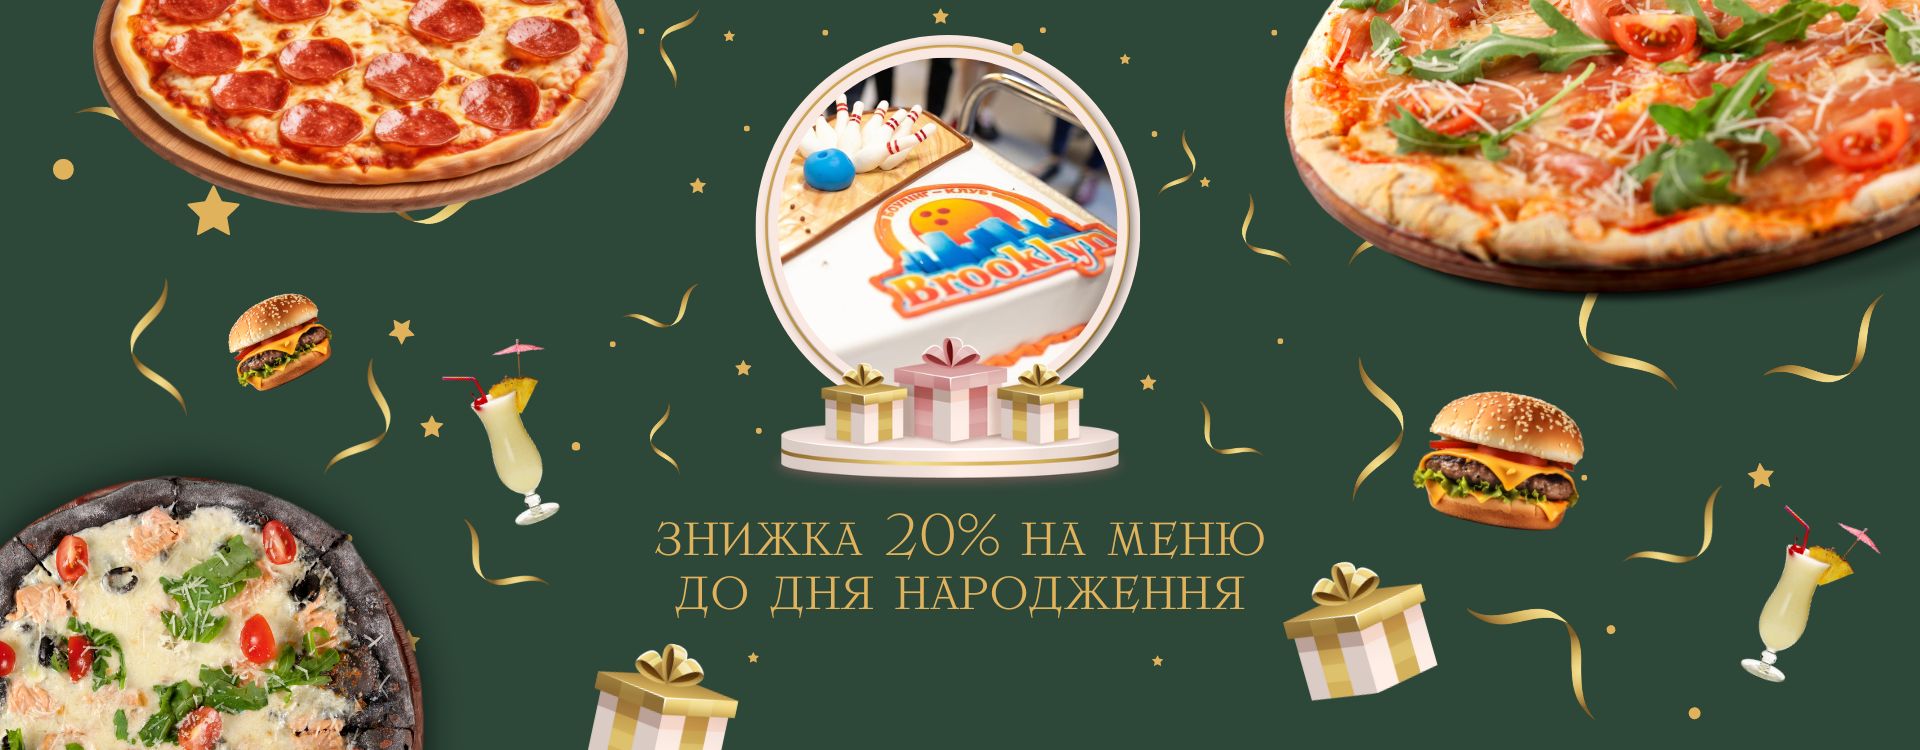 20% discount on the birthday menu